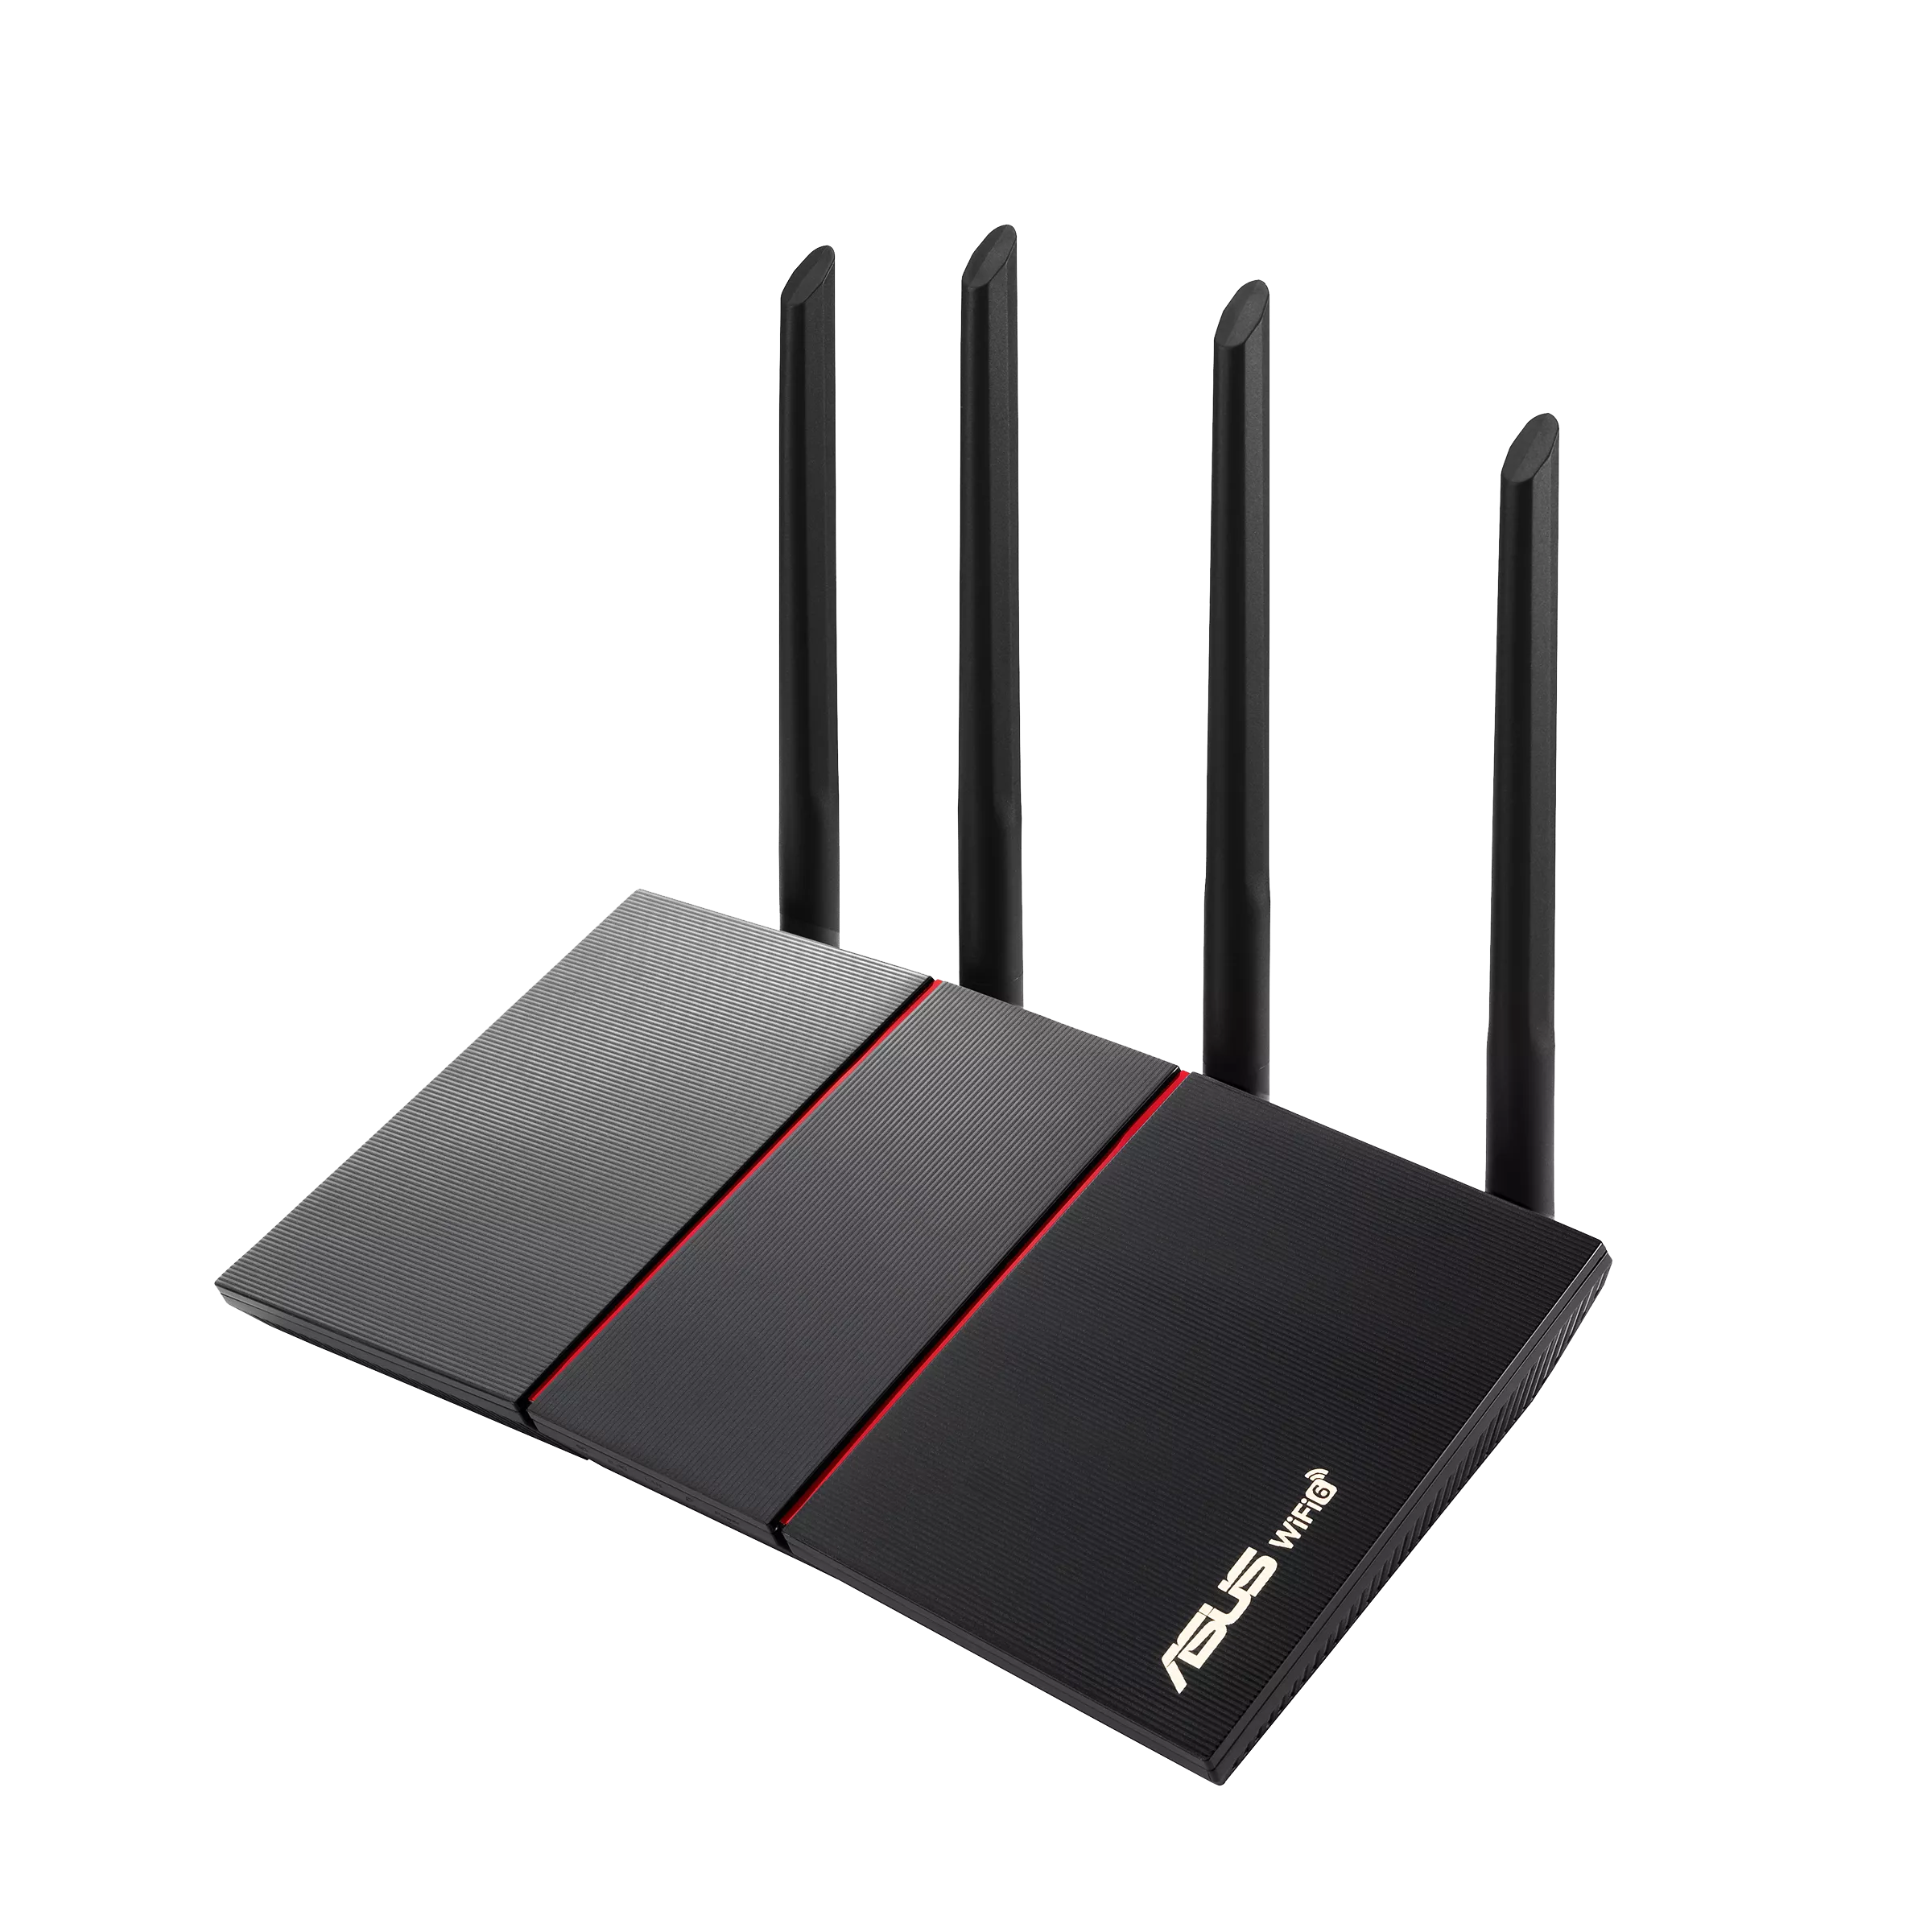 RT-AX55 ASUS Двухдиапазонный маршрутизатор стандарта Wi-Fi 802.11ax (AX1800) с технологиями MU-MIMO и OFDMA, информационной защитой AiProtection Classic на базе технологий Trend Micro и поддержкой технологии ячеистых сетей ASUS AiMesh